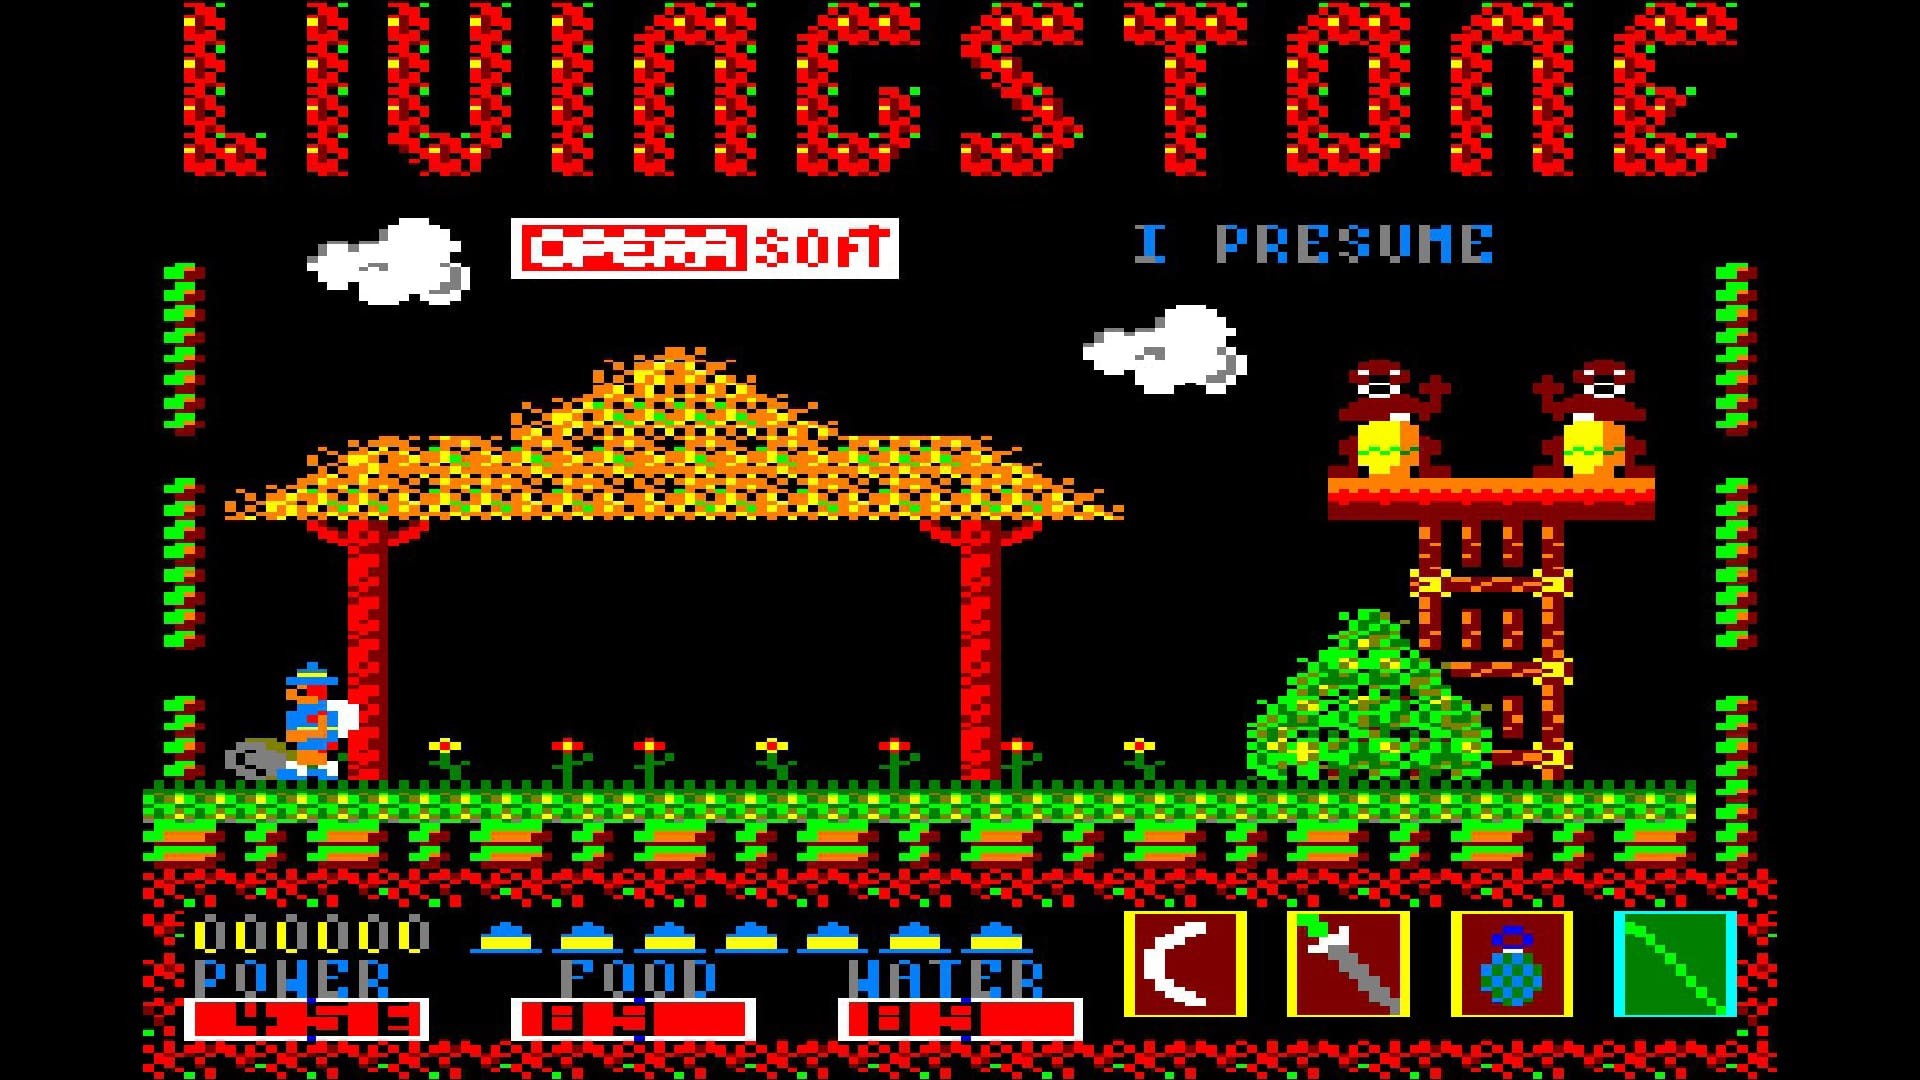 Retro Golden Age - Livingstone I Presume Steam CD Key 3.38 USD